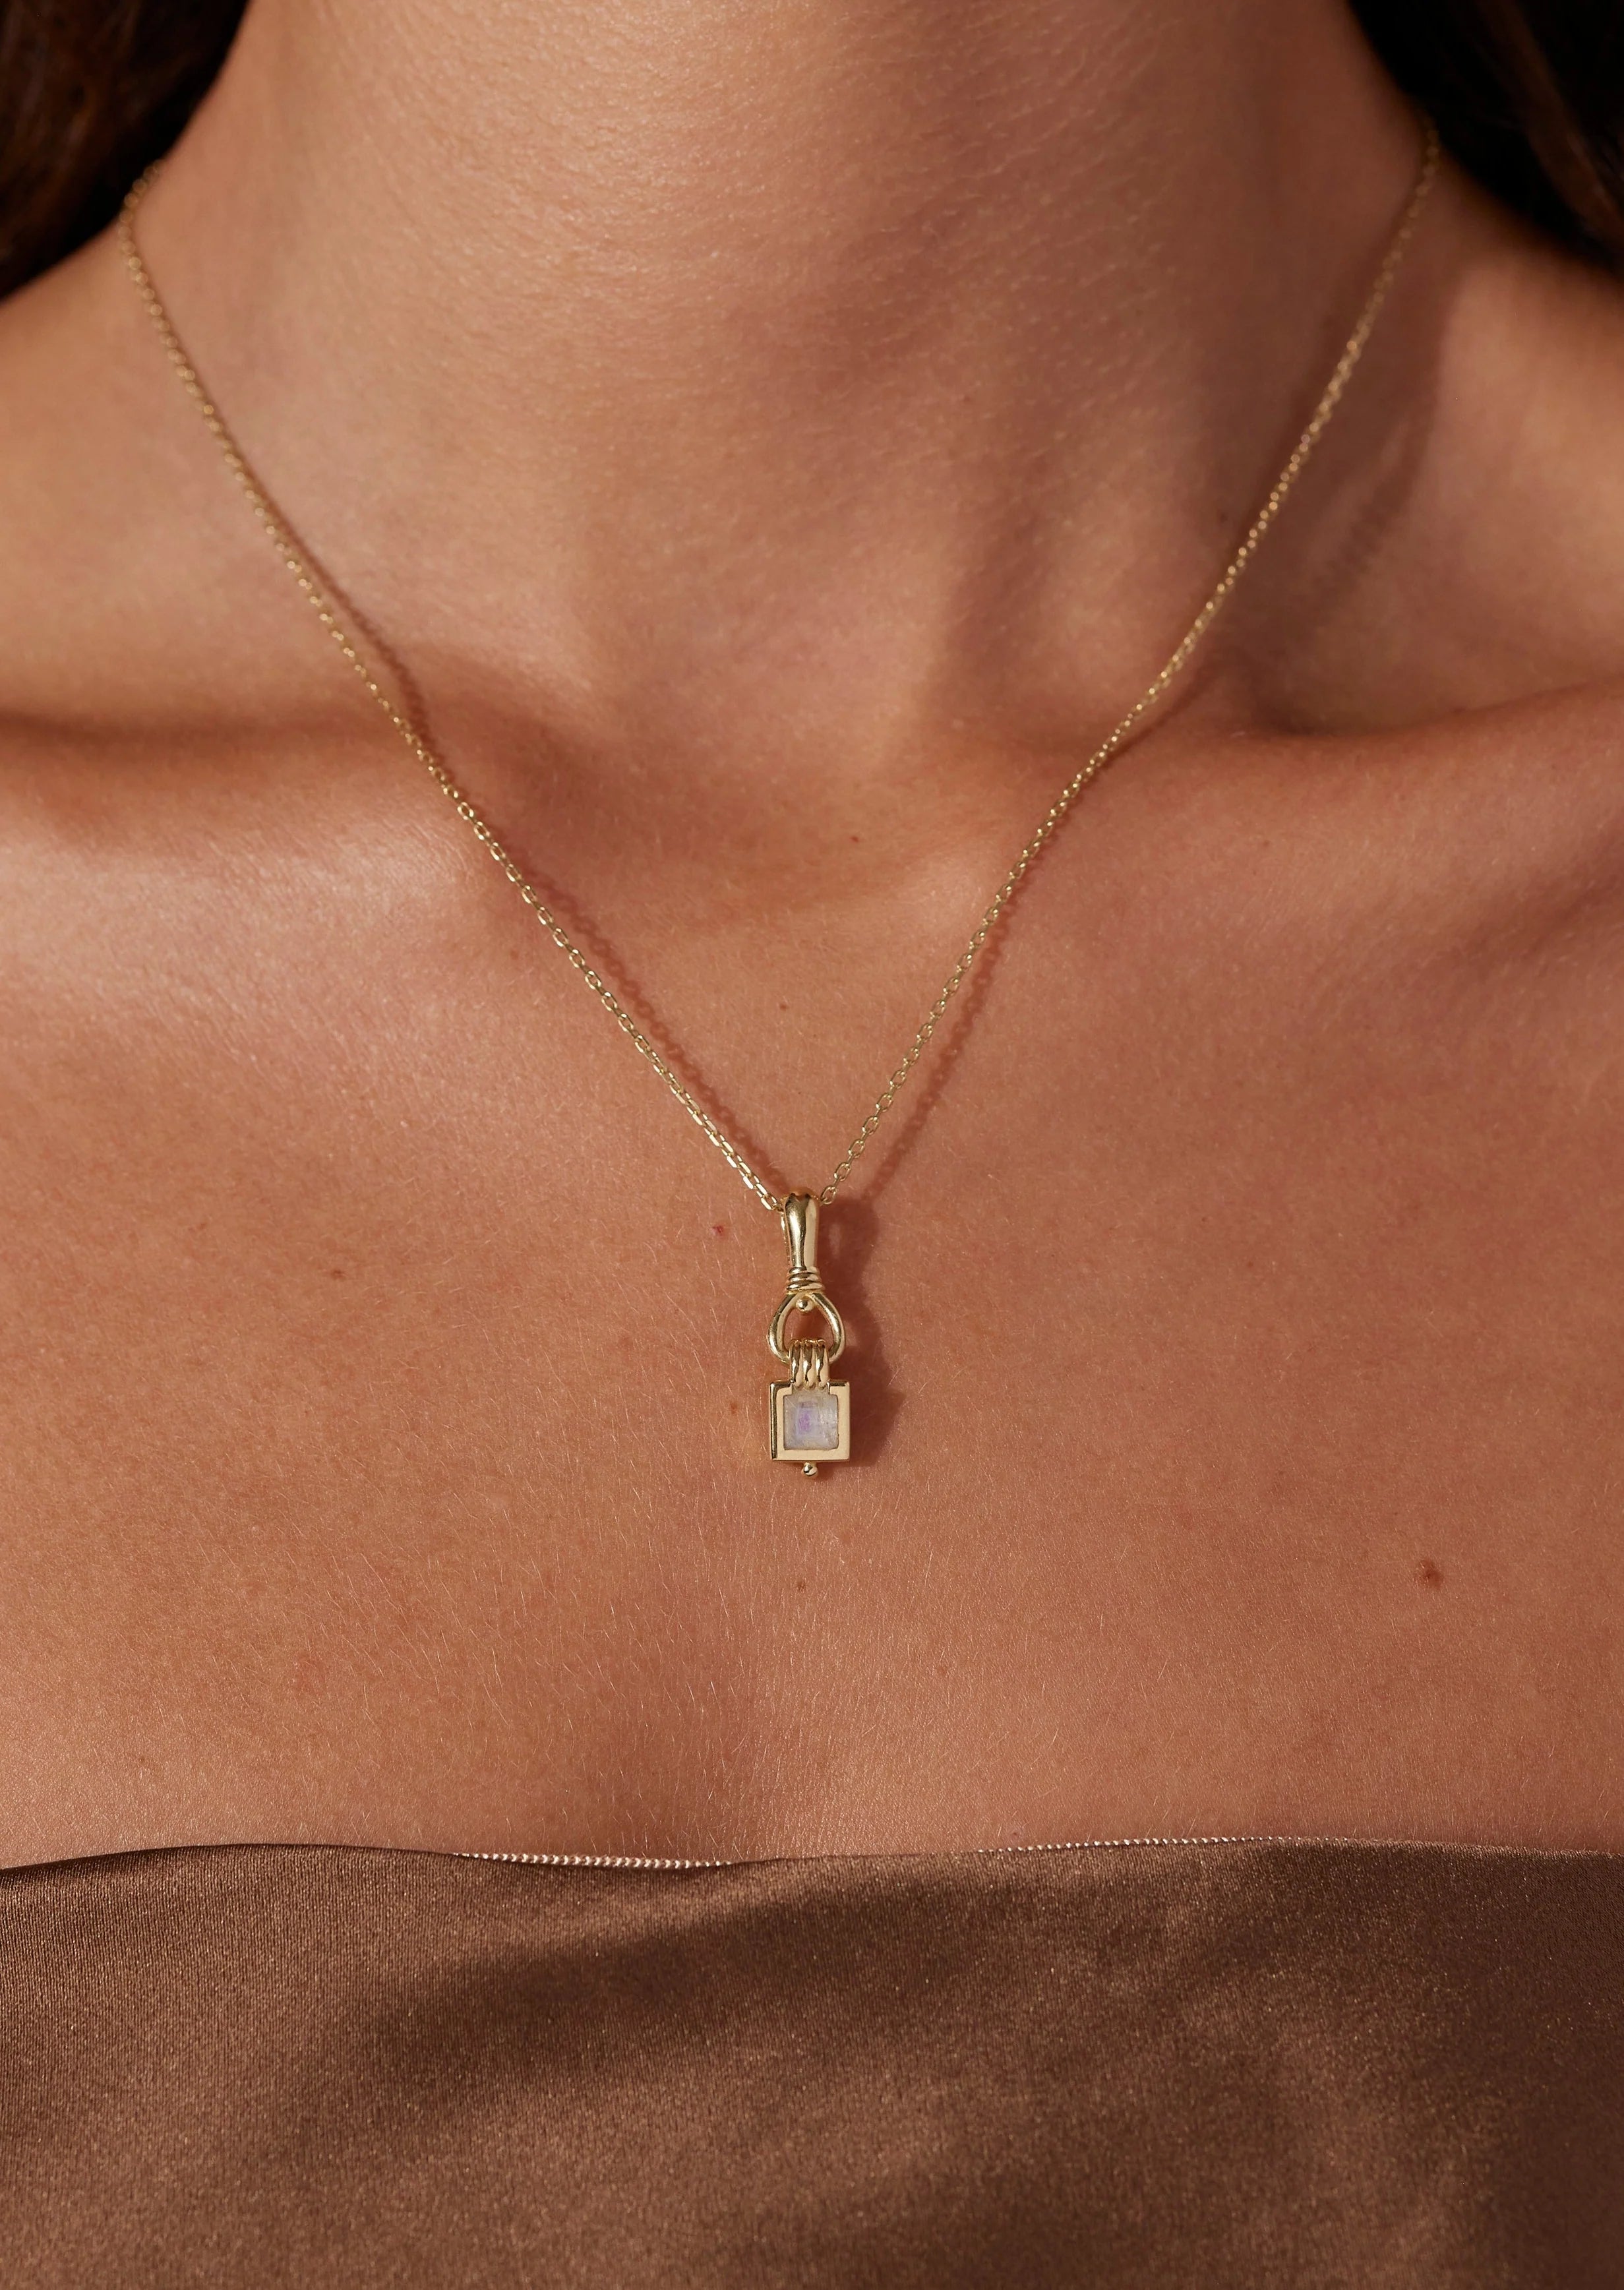 Toni May Freya Moonstone Gold Necklace